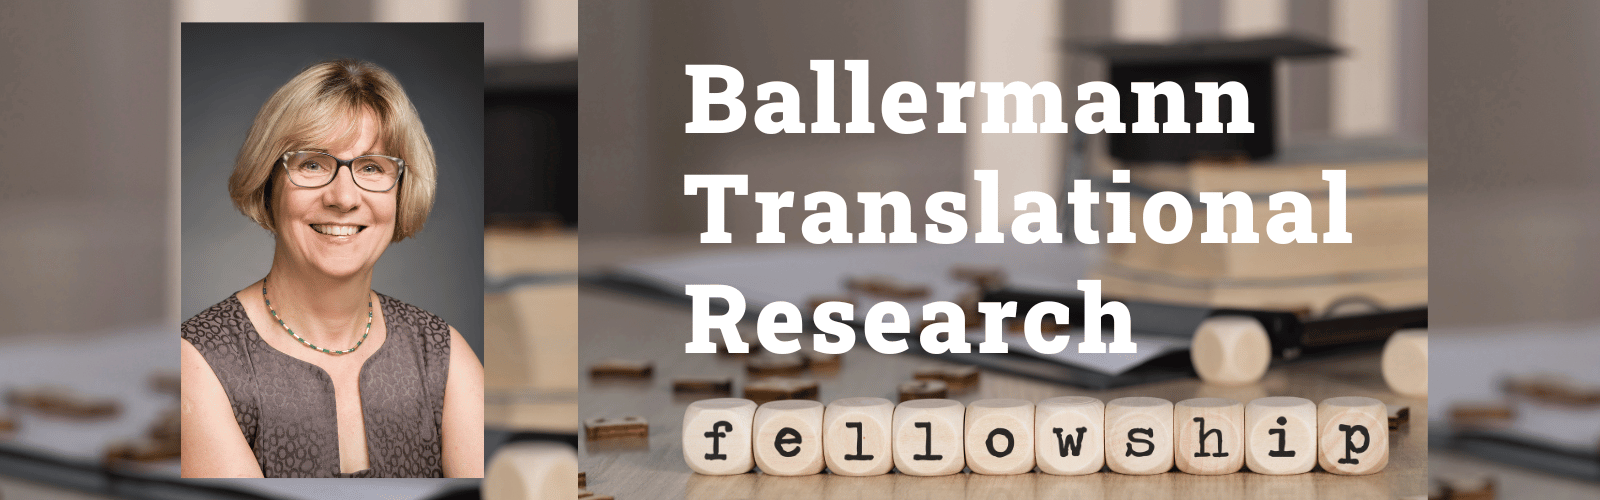 Ballermann Translational Research Fellowship